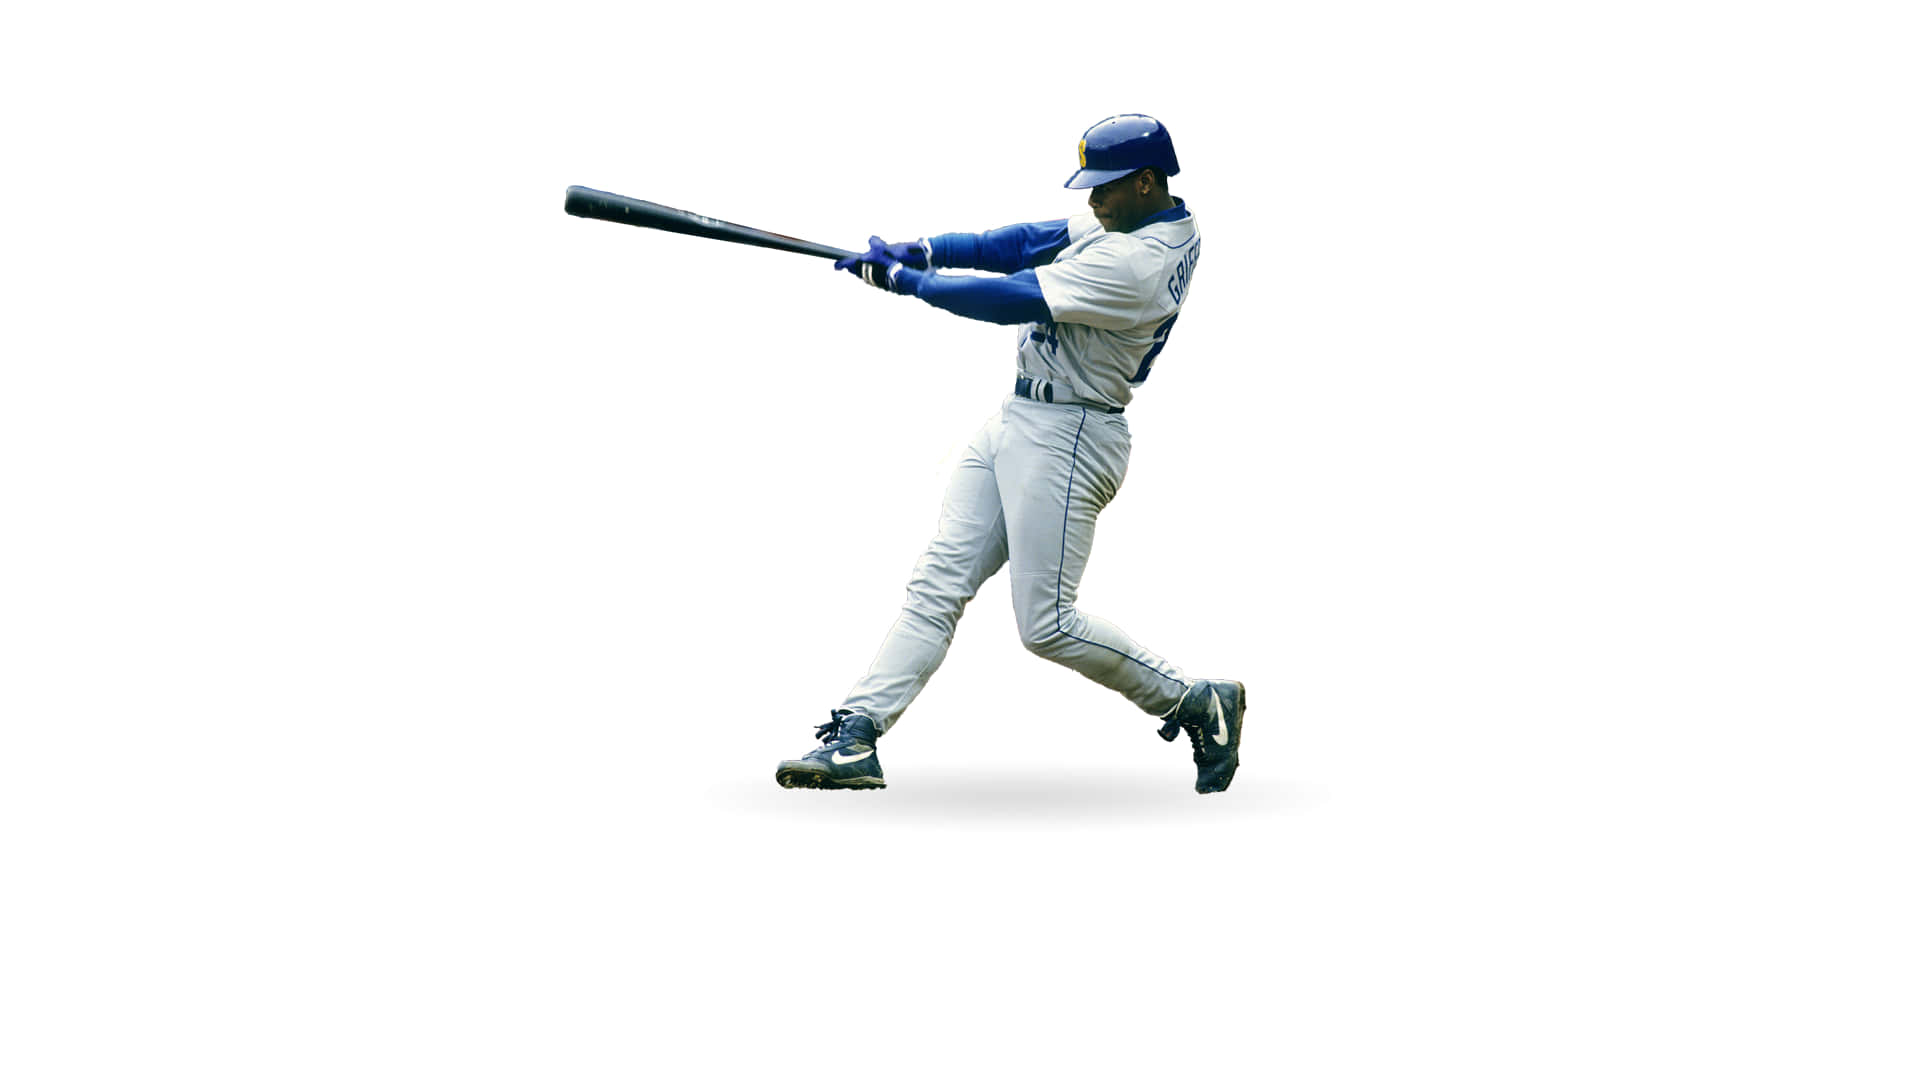 Lalegendaria Jugador De Béisbol Ken Griffey Jr Se Muestra Balanceando Un Bate. Fondo de pantalla